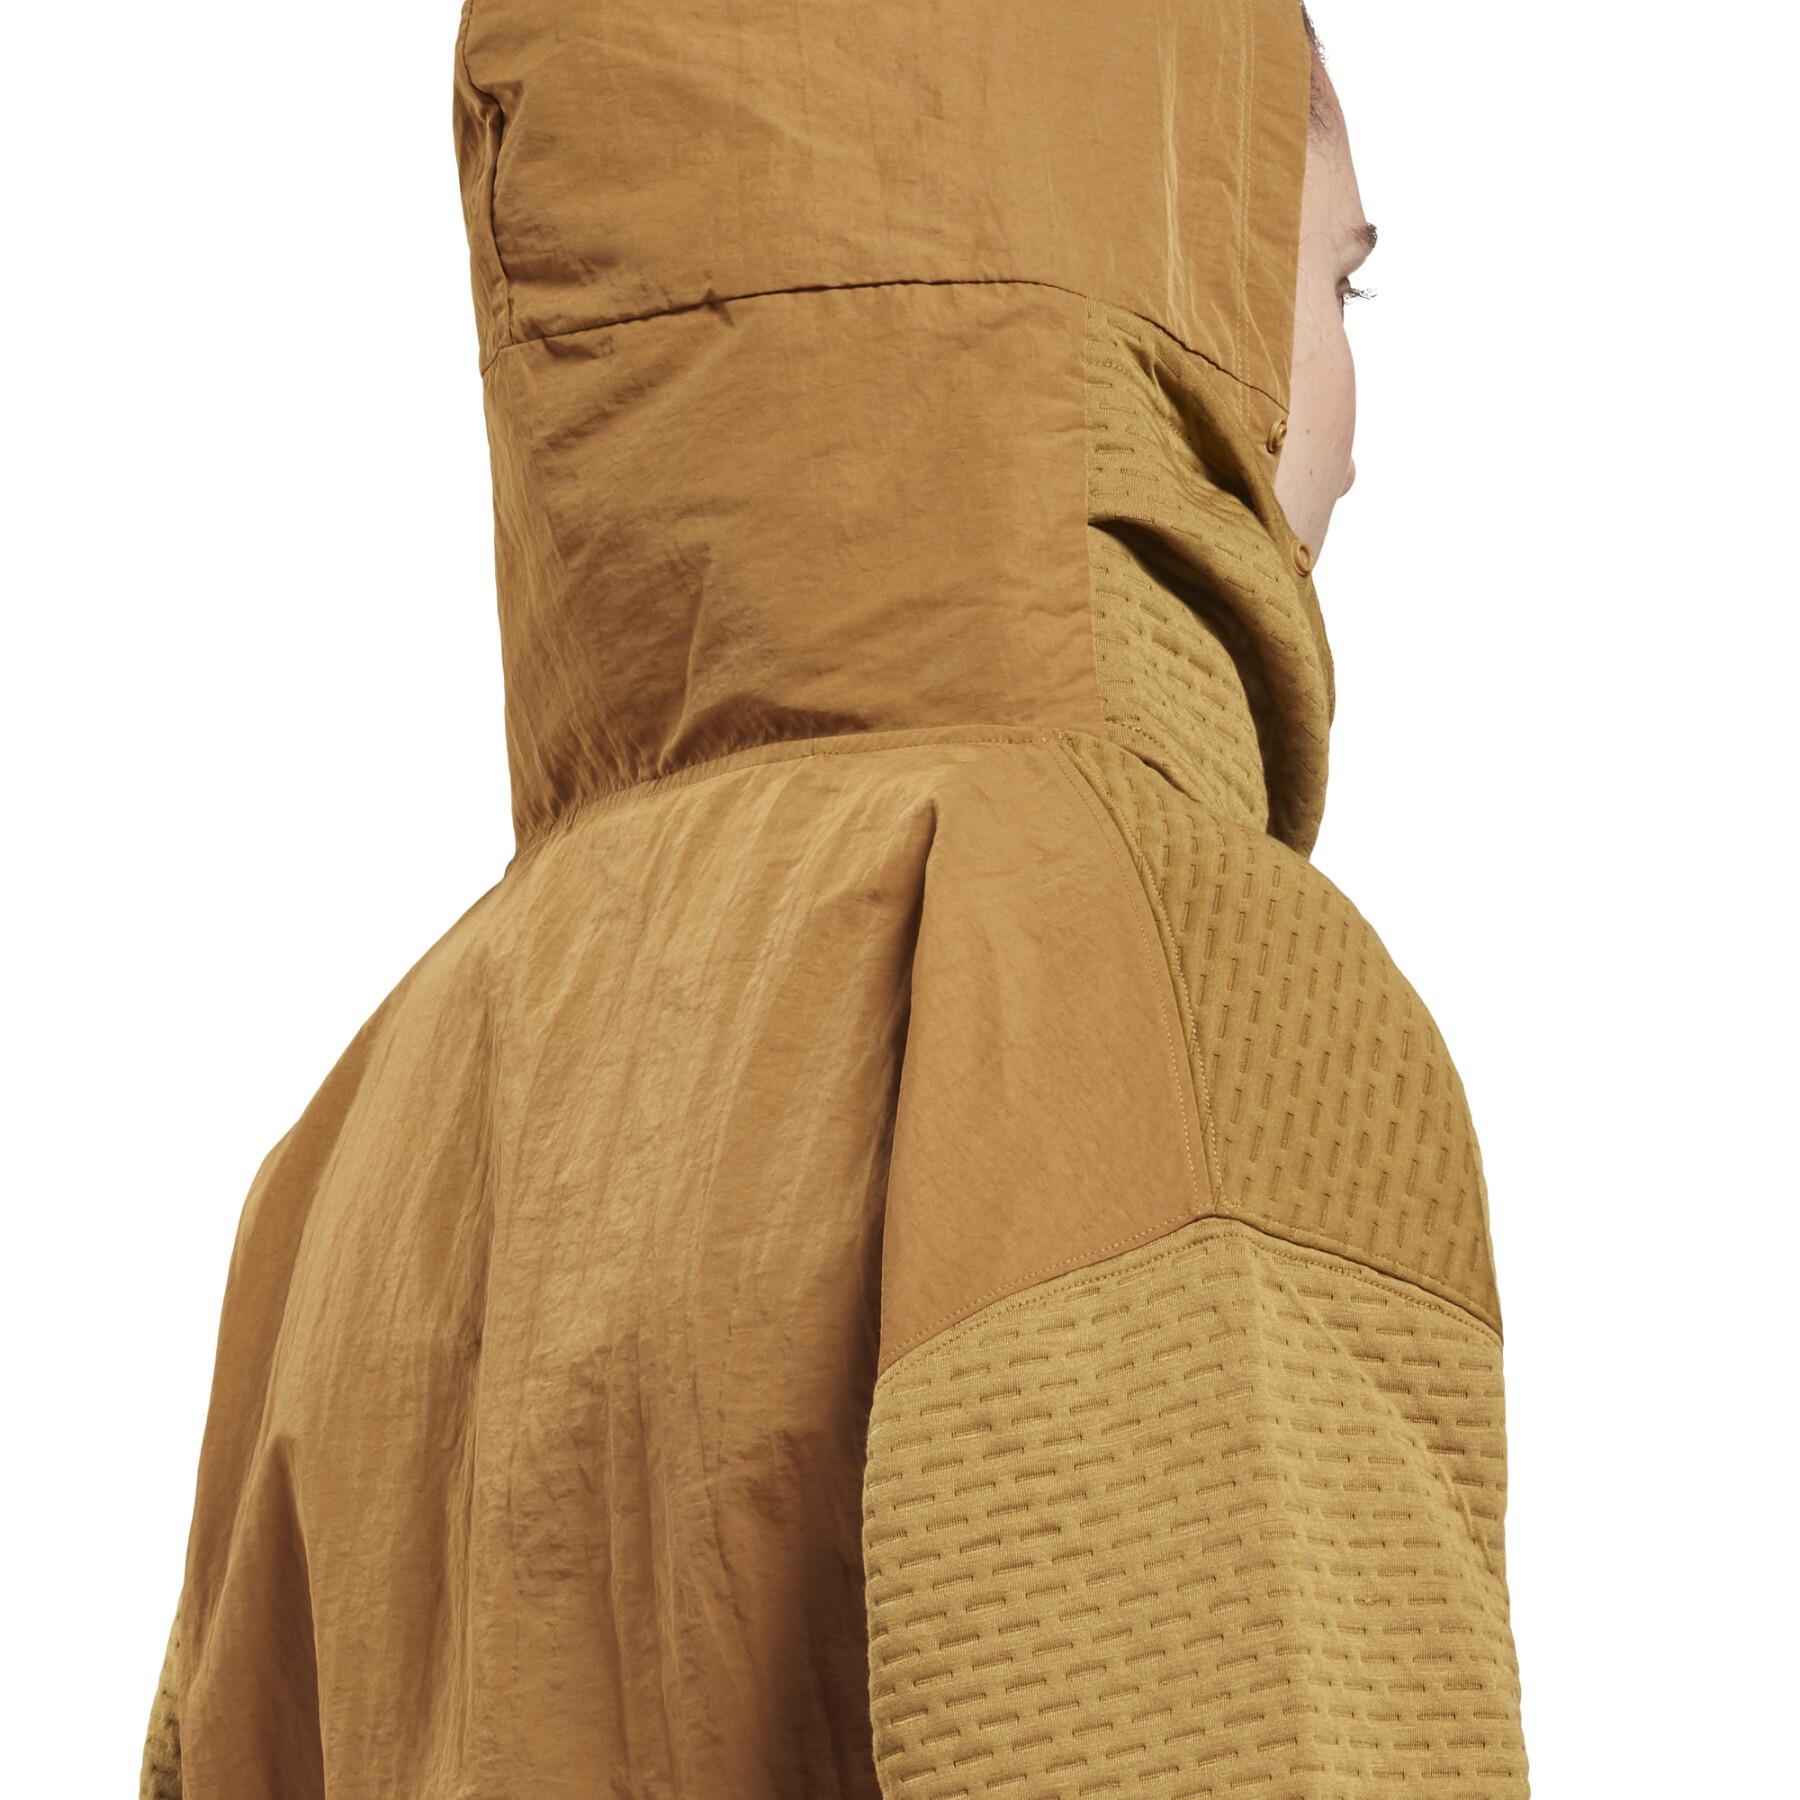 Women's hooded sweatshirt Reebok Thermowarm+ Graphene